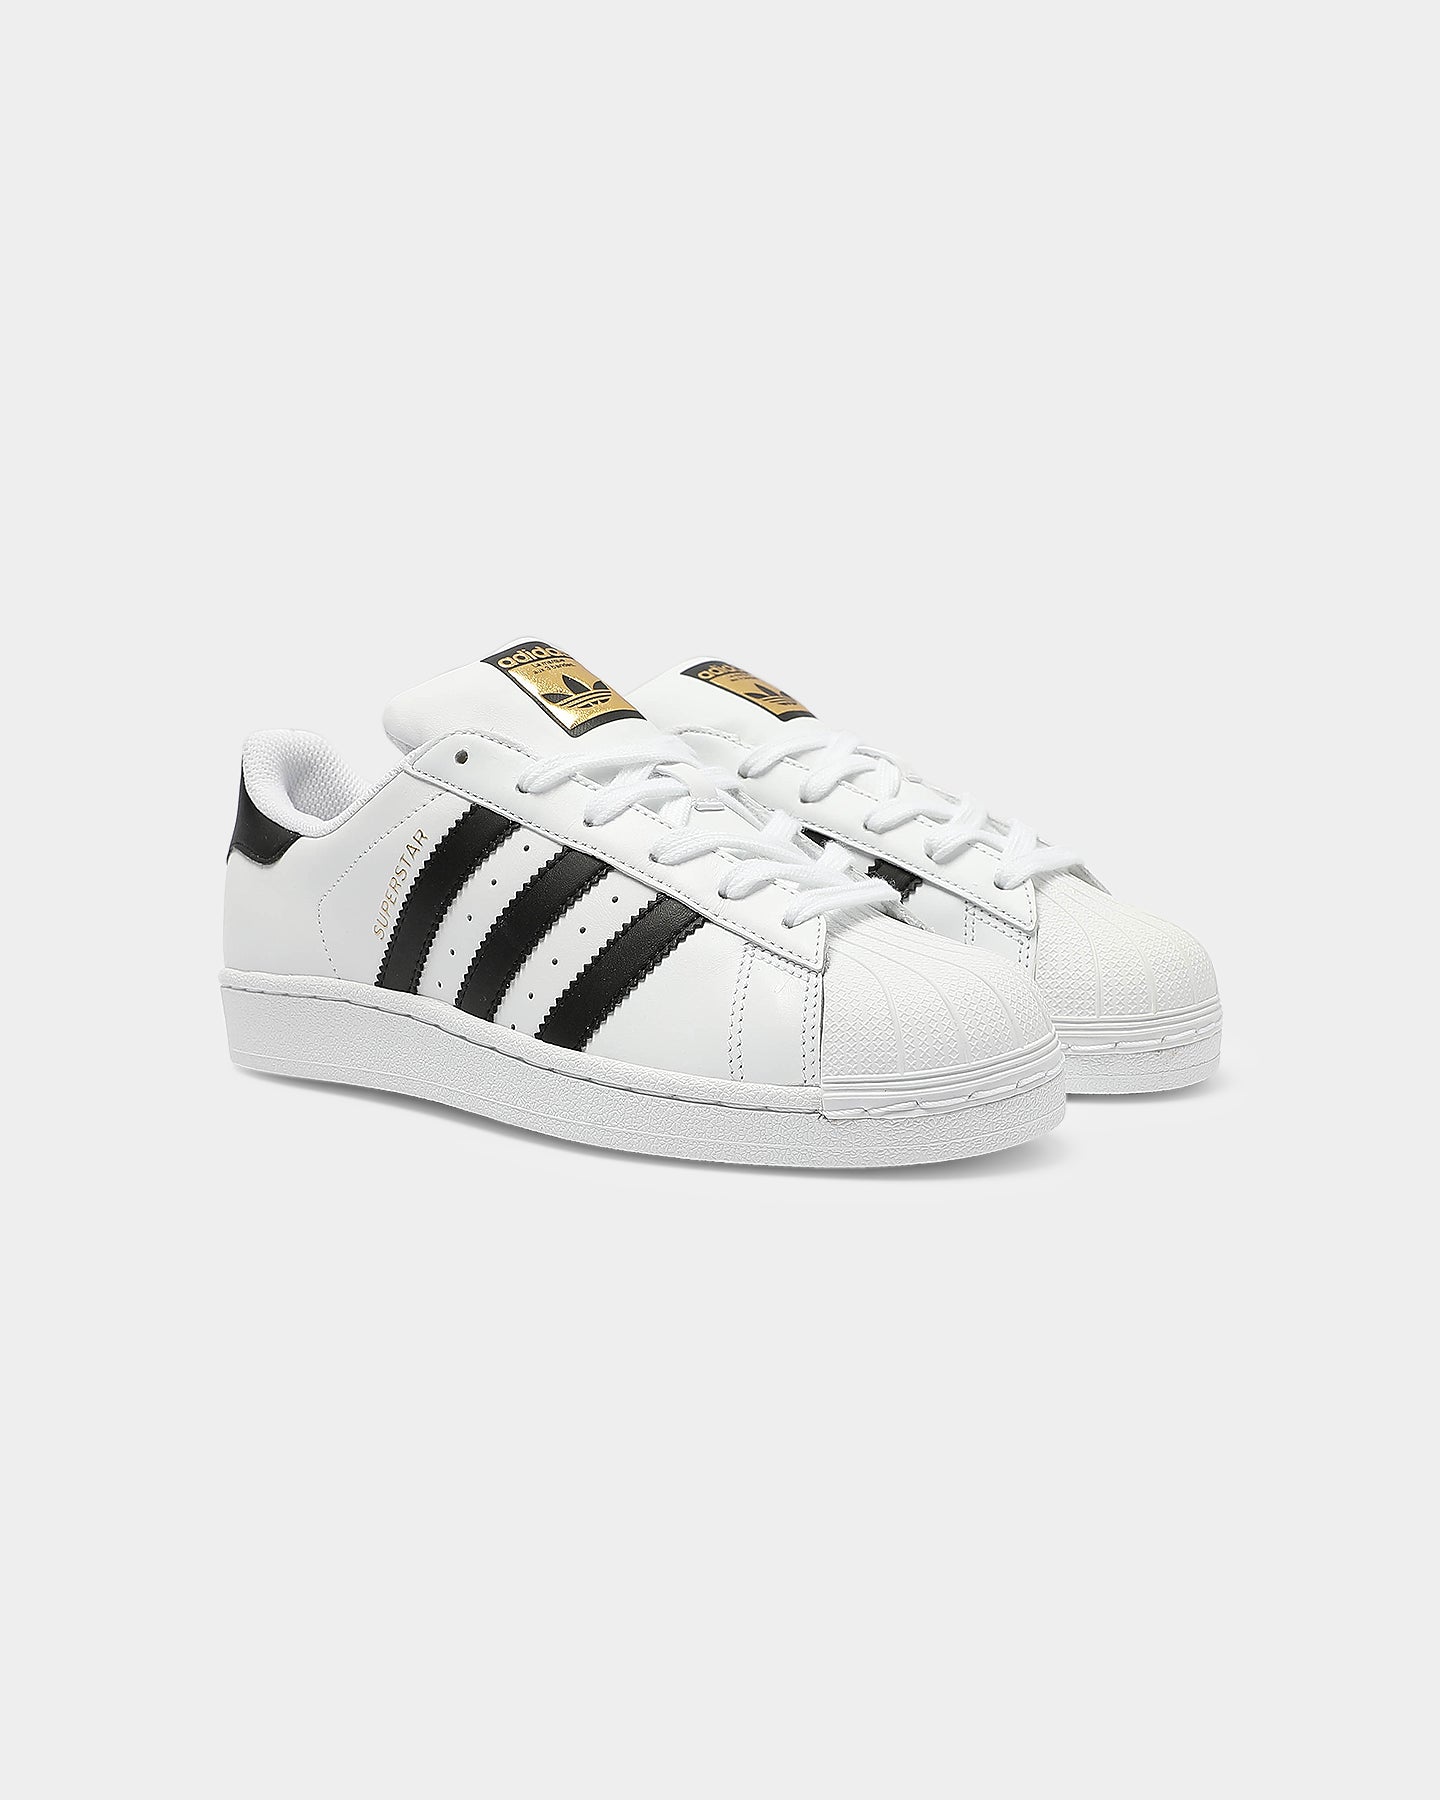 Adidas Originals Superstar Shoe White 